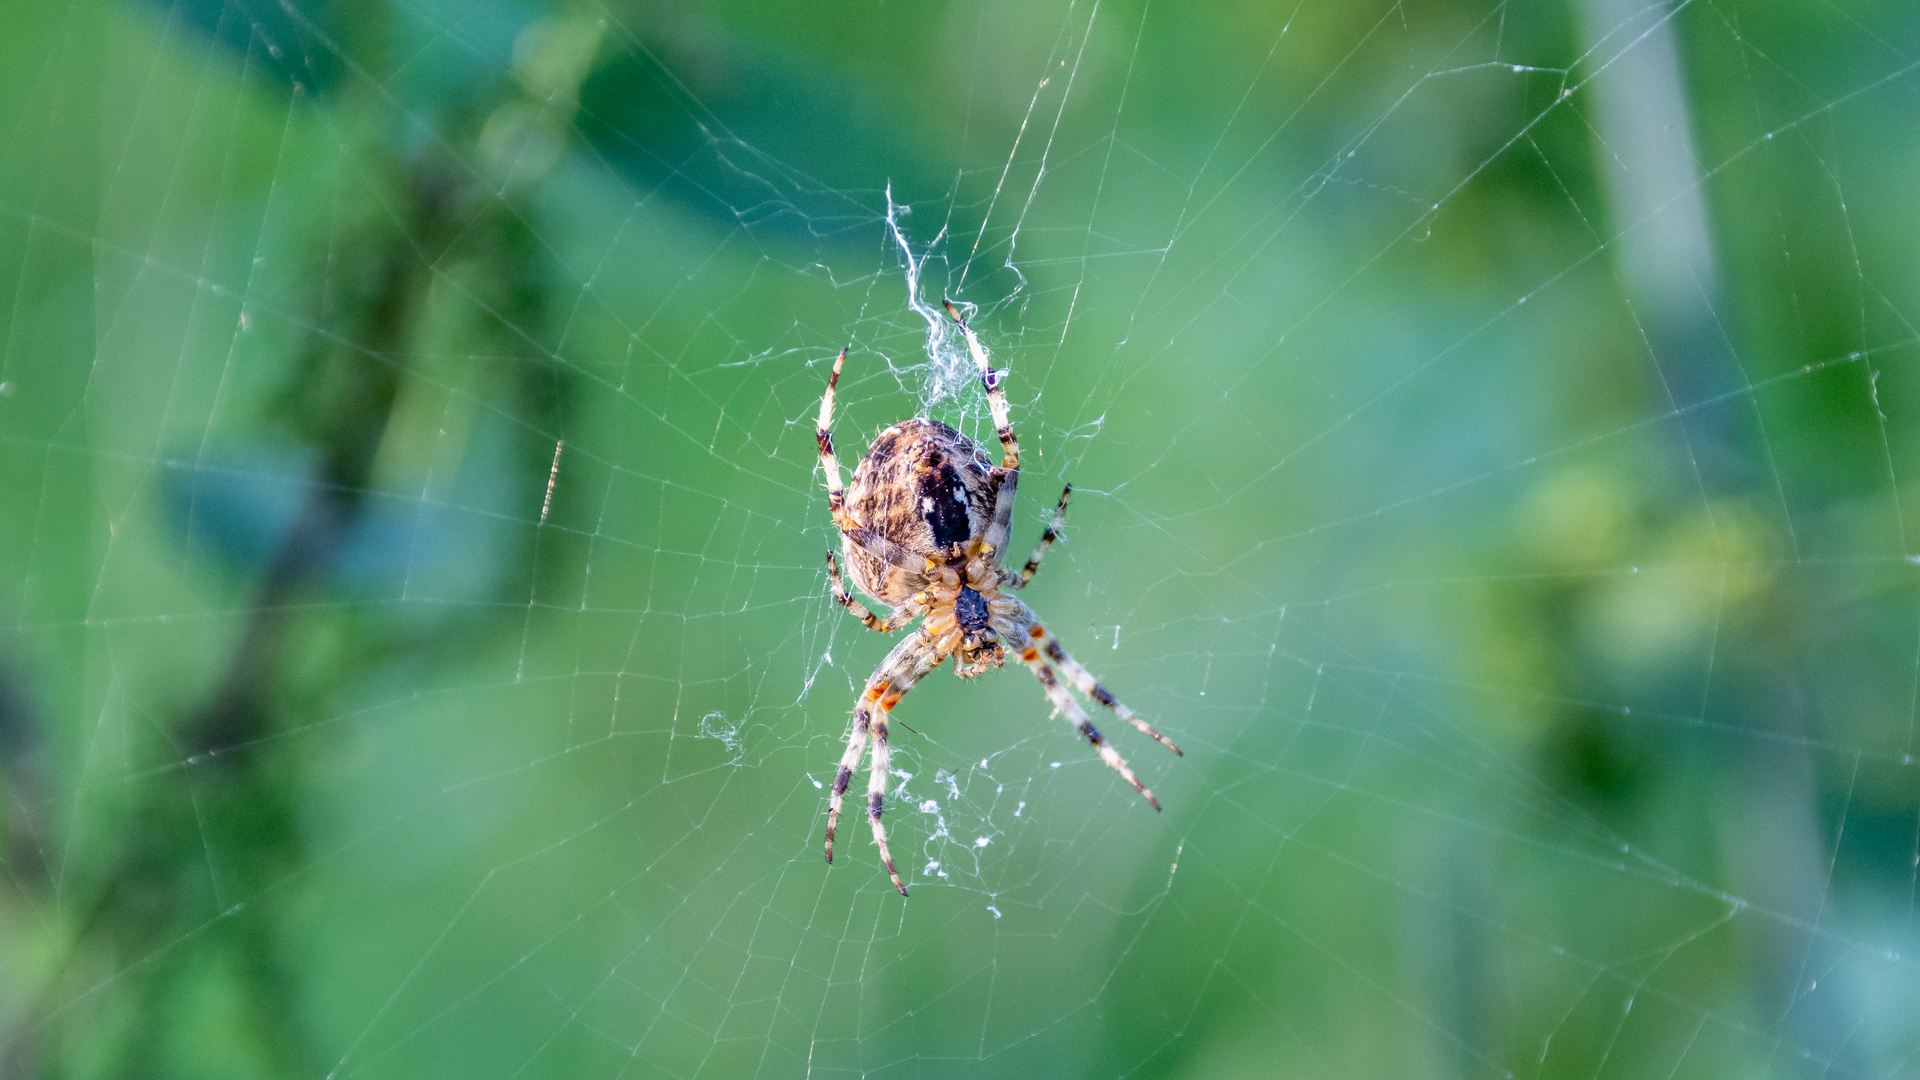 Sticky Science: the Evolution of Spider Webs